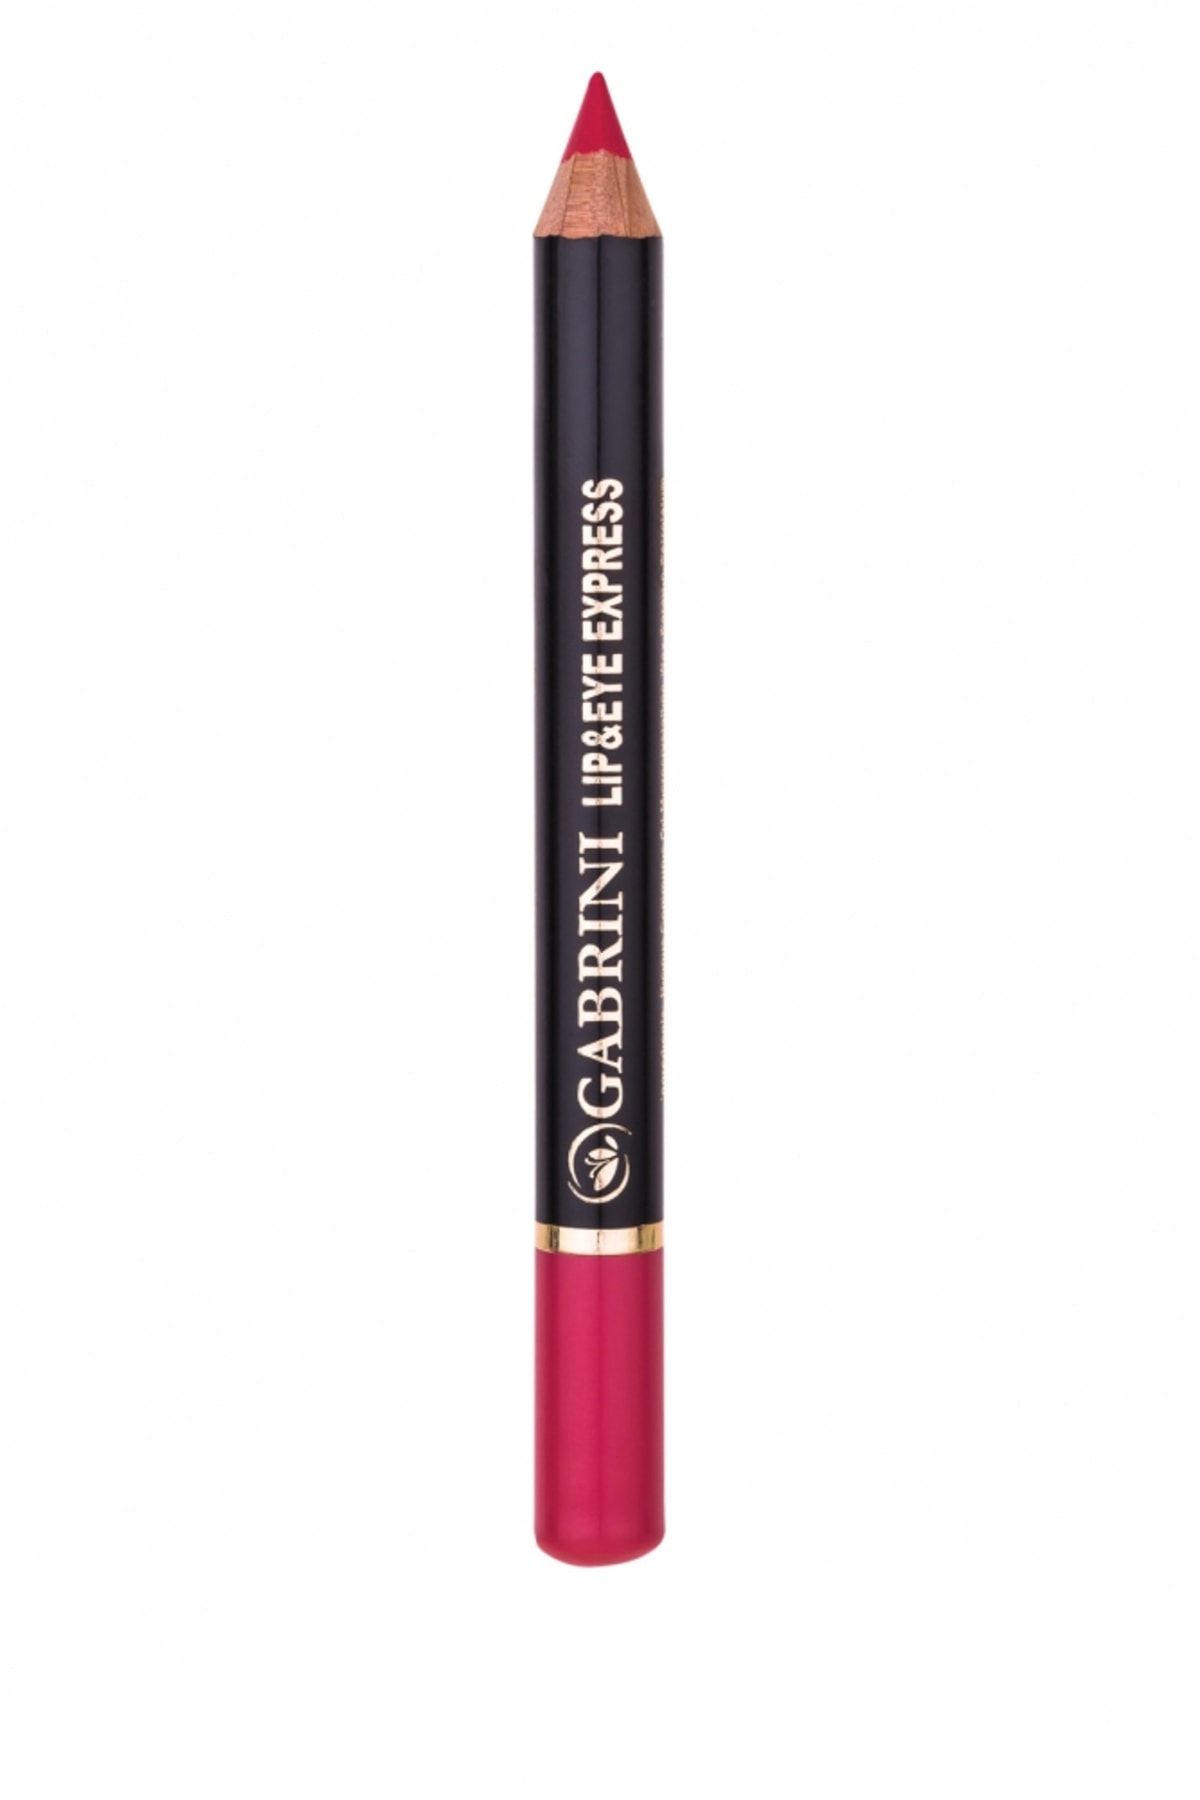 Gabrini Express Lip& Eye Pencil - 107